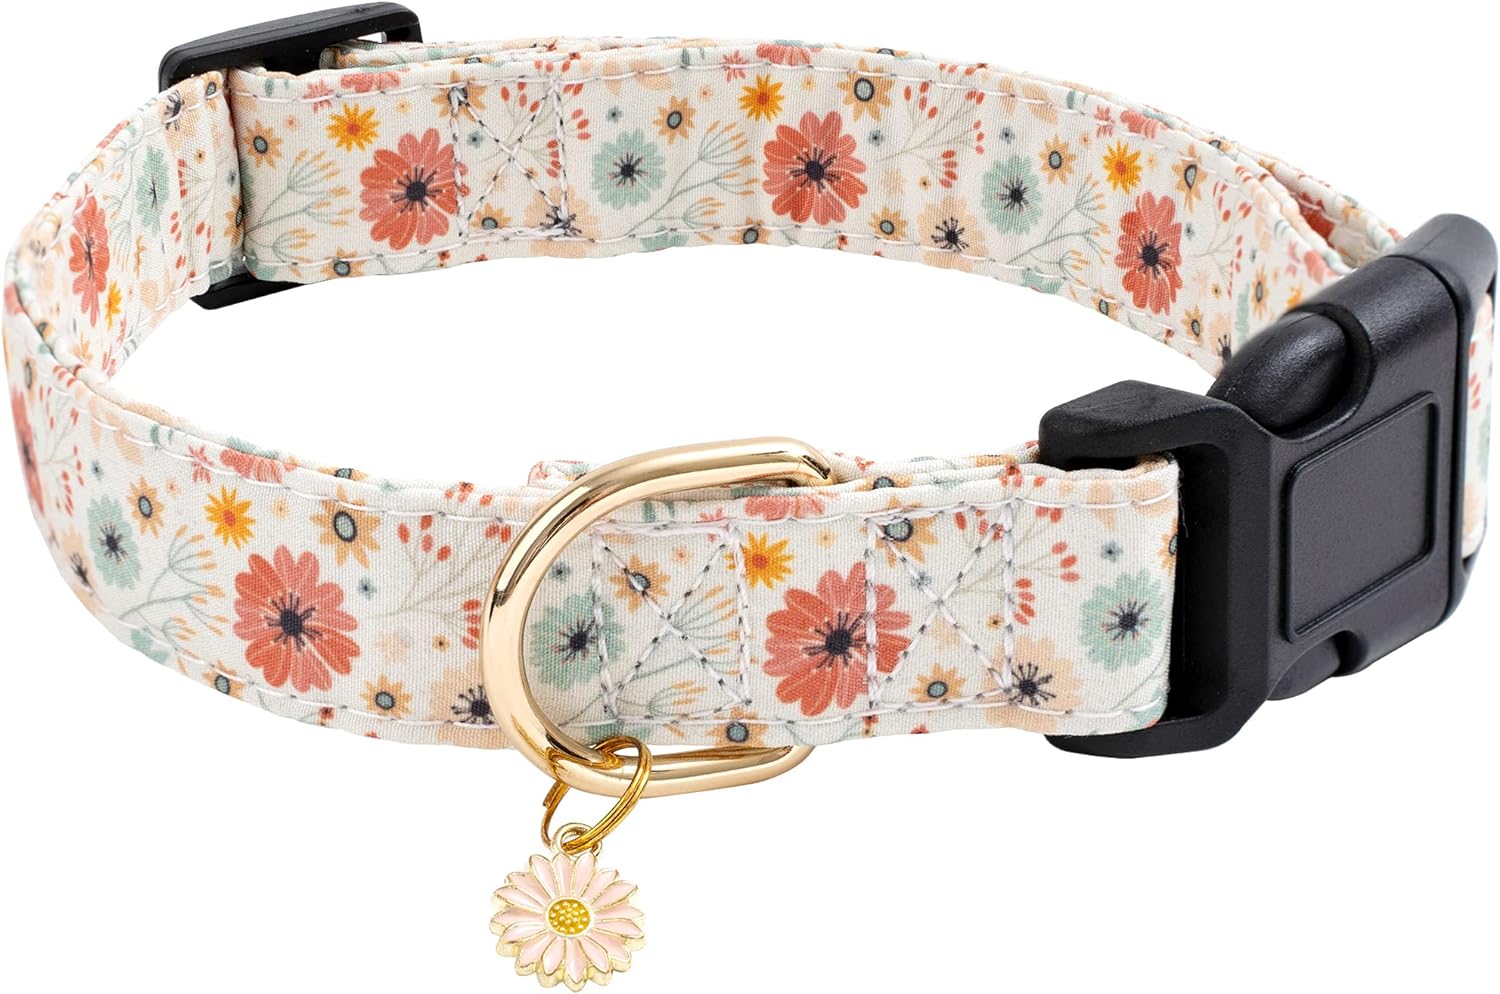 Faygarsle Designer Dog Collar with Flower Charms